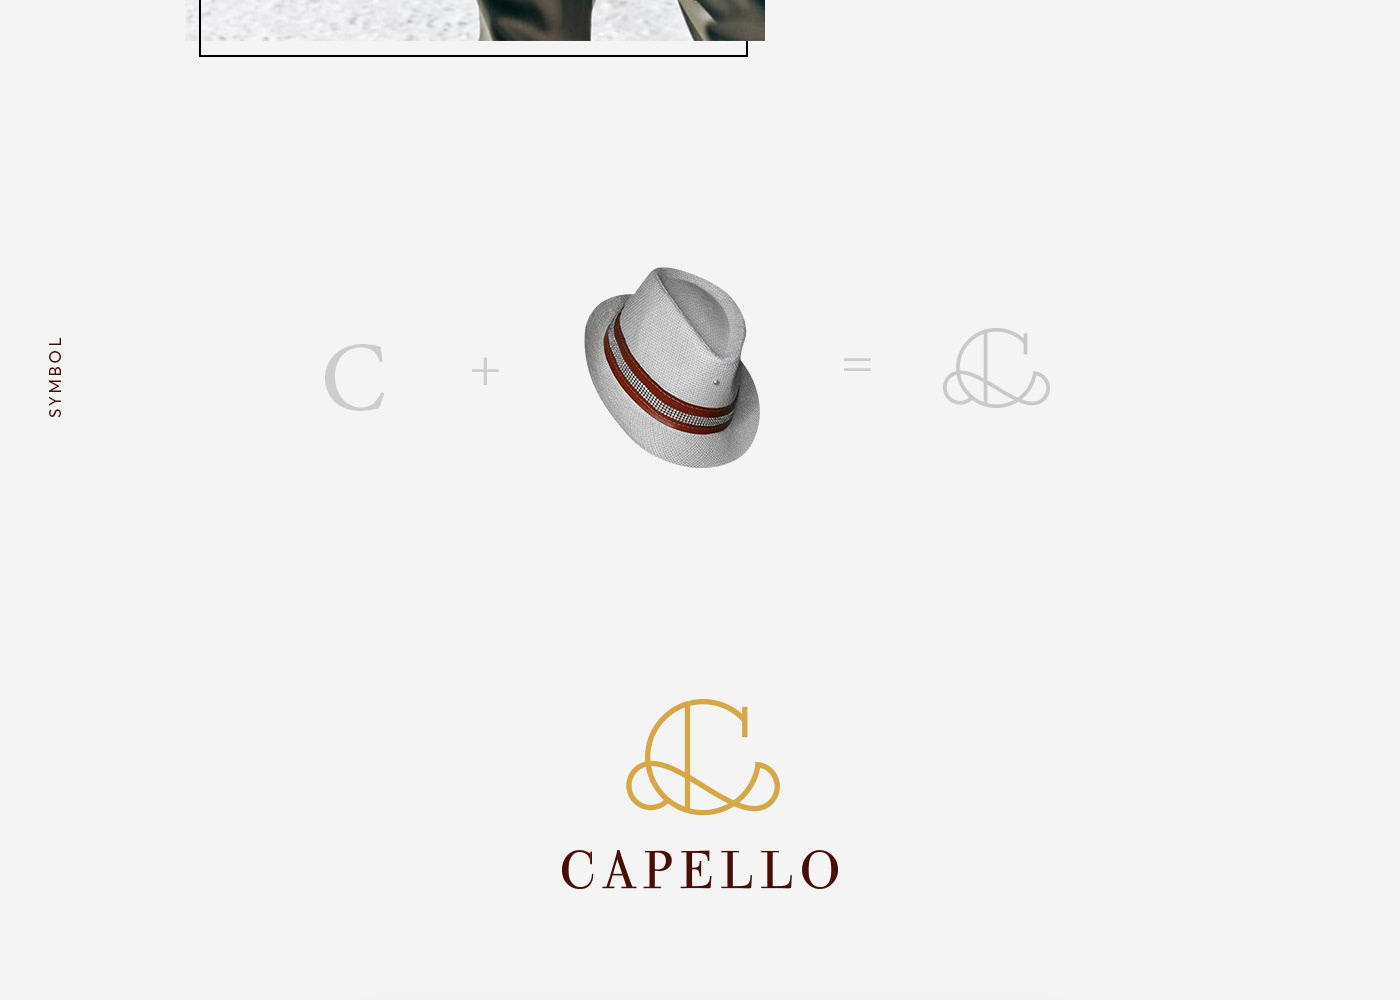 vasiliskanaris fashionlogo fashionbrand capello logo Fashion  brand hat hatlogo graphicdesign